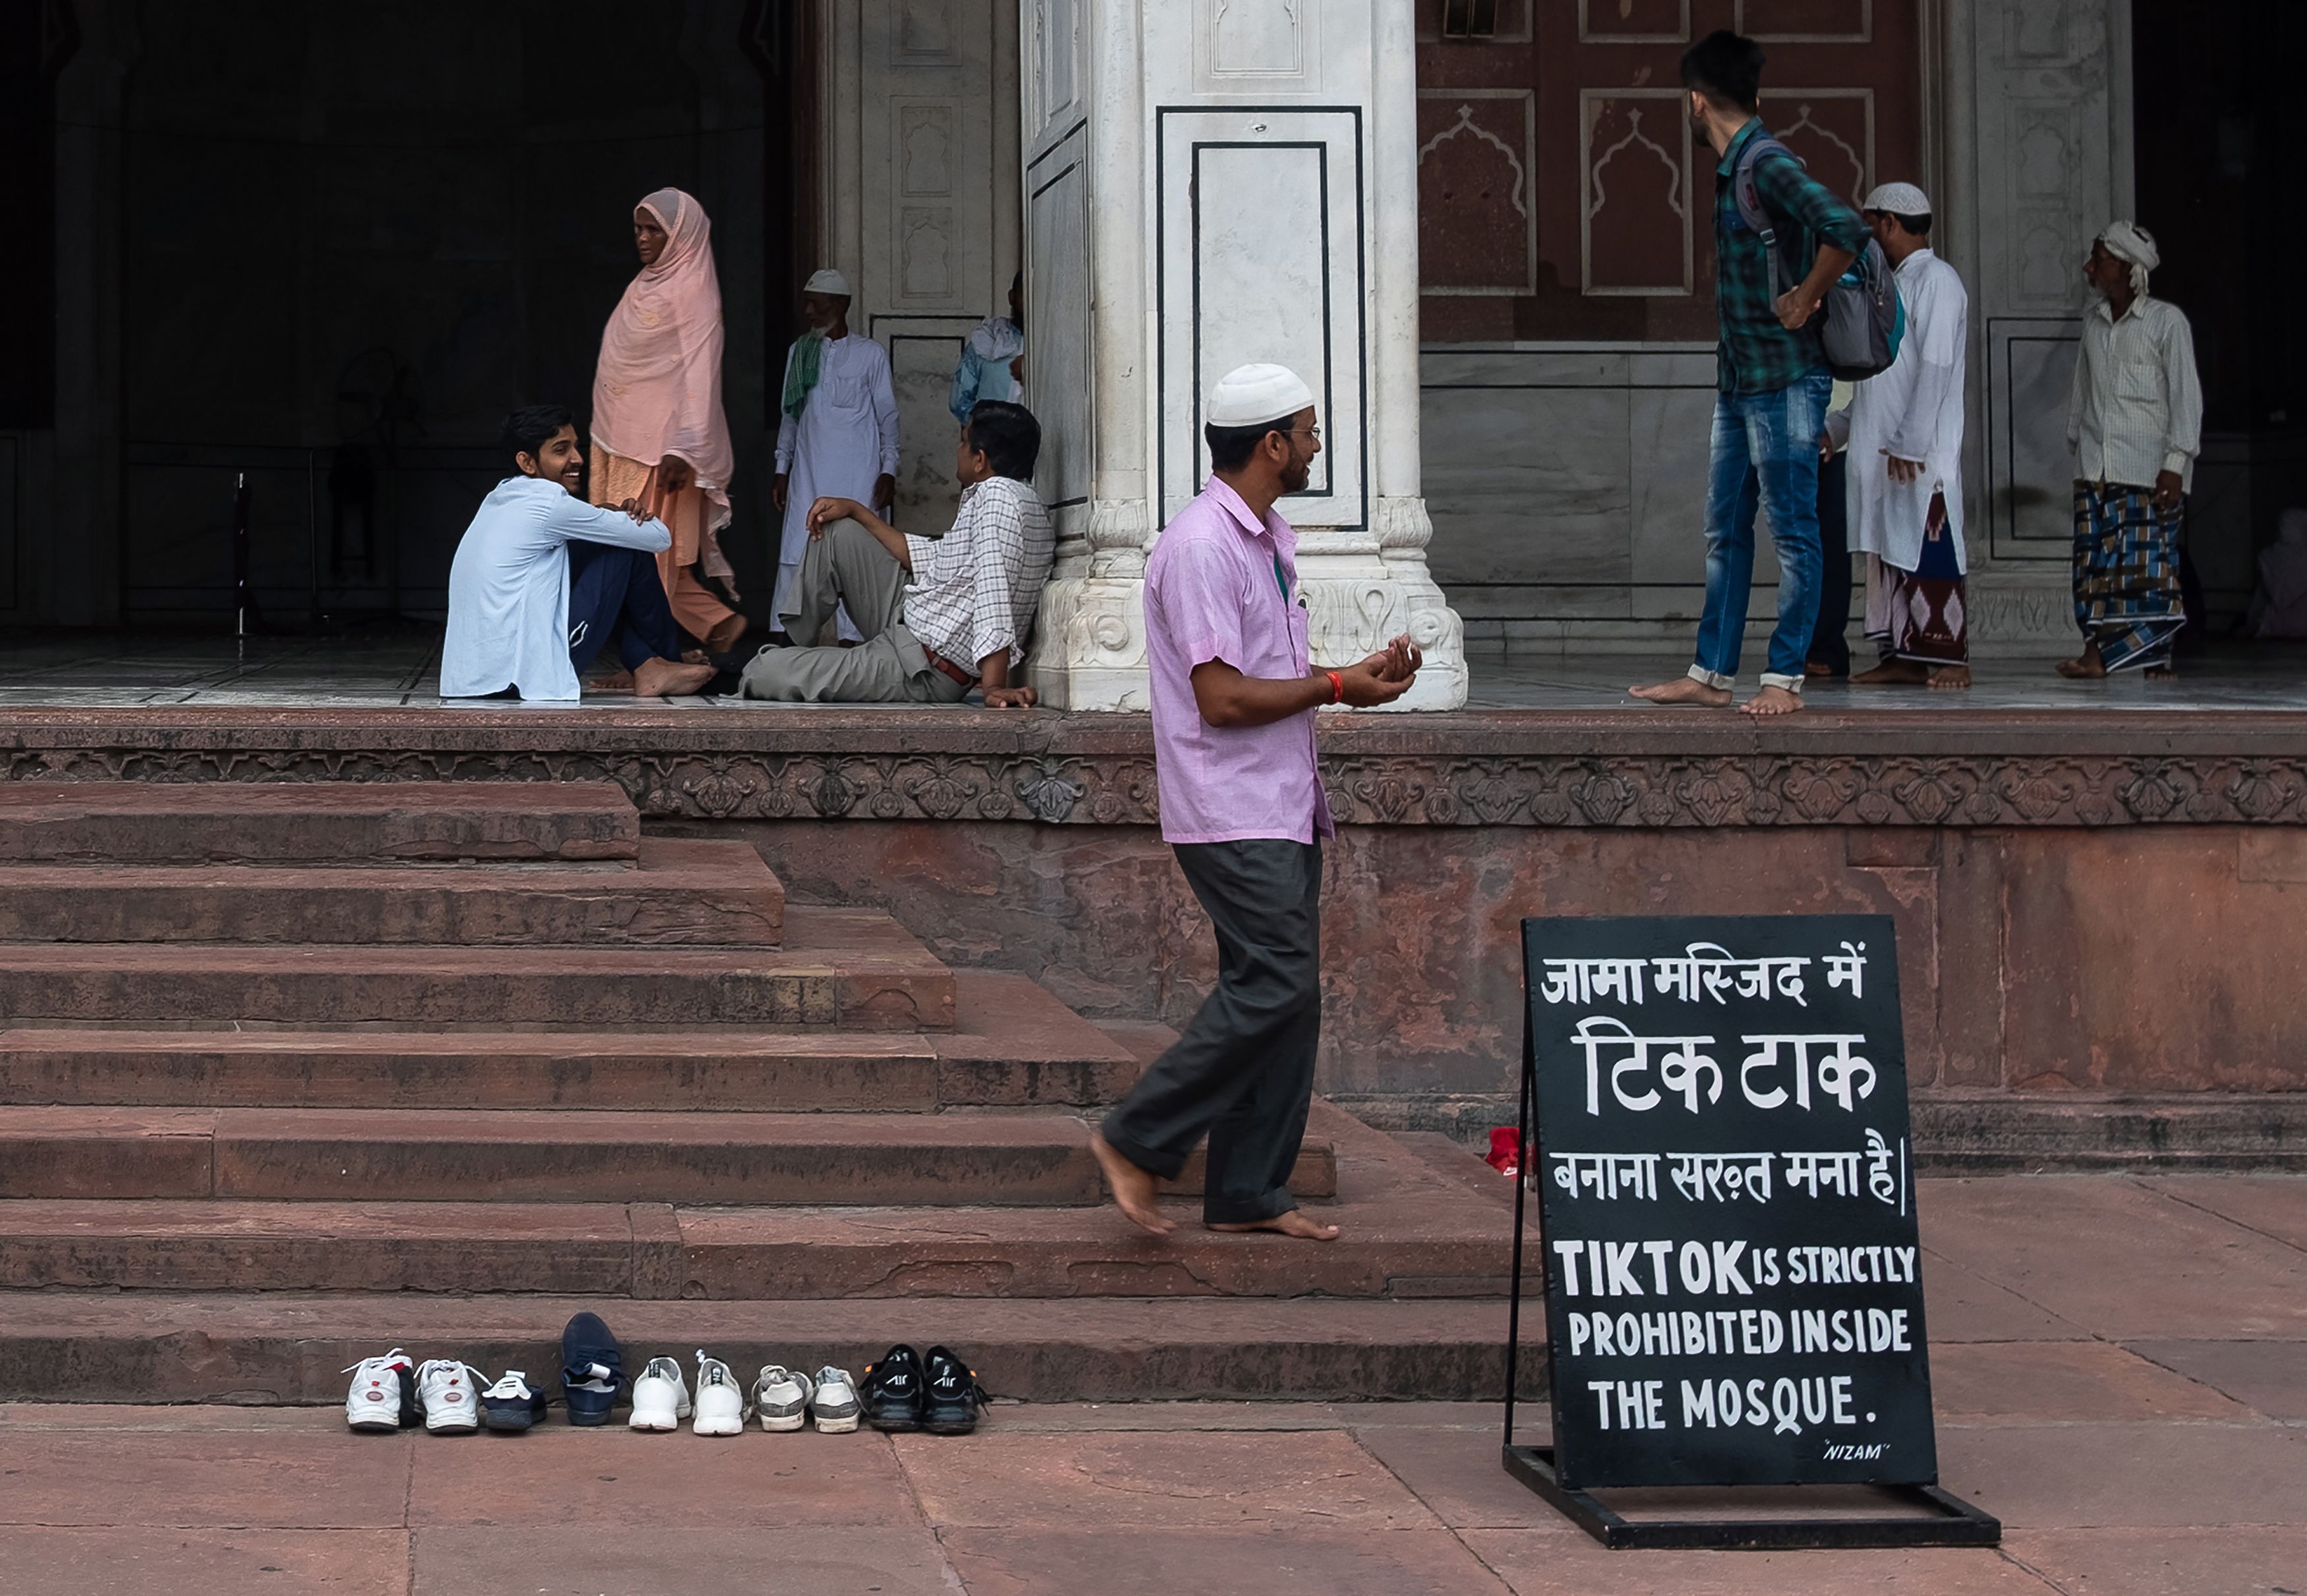 A sign in the Jama Masjid mosque in New Delhi prohibiting the TikTok app.